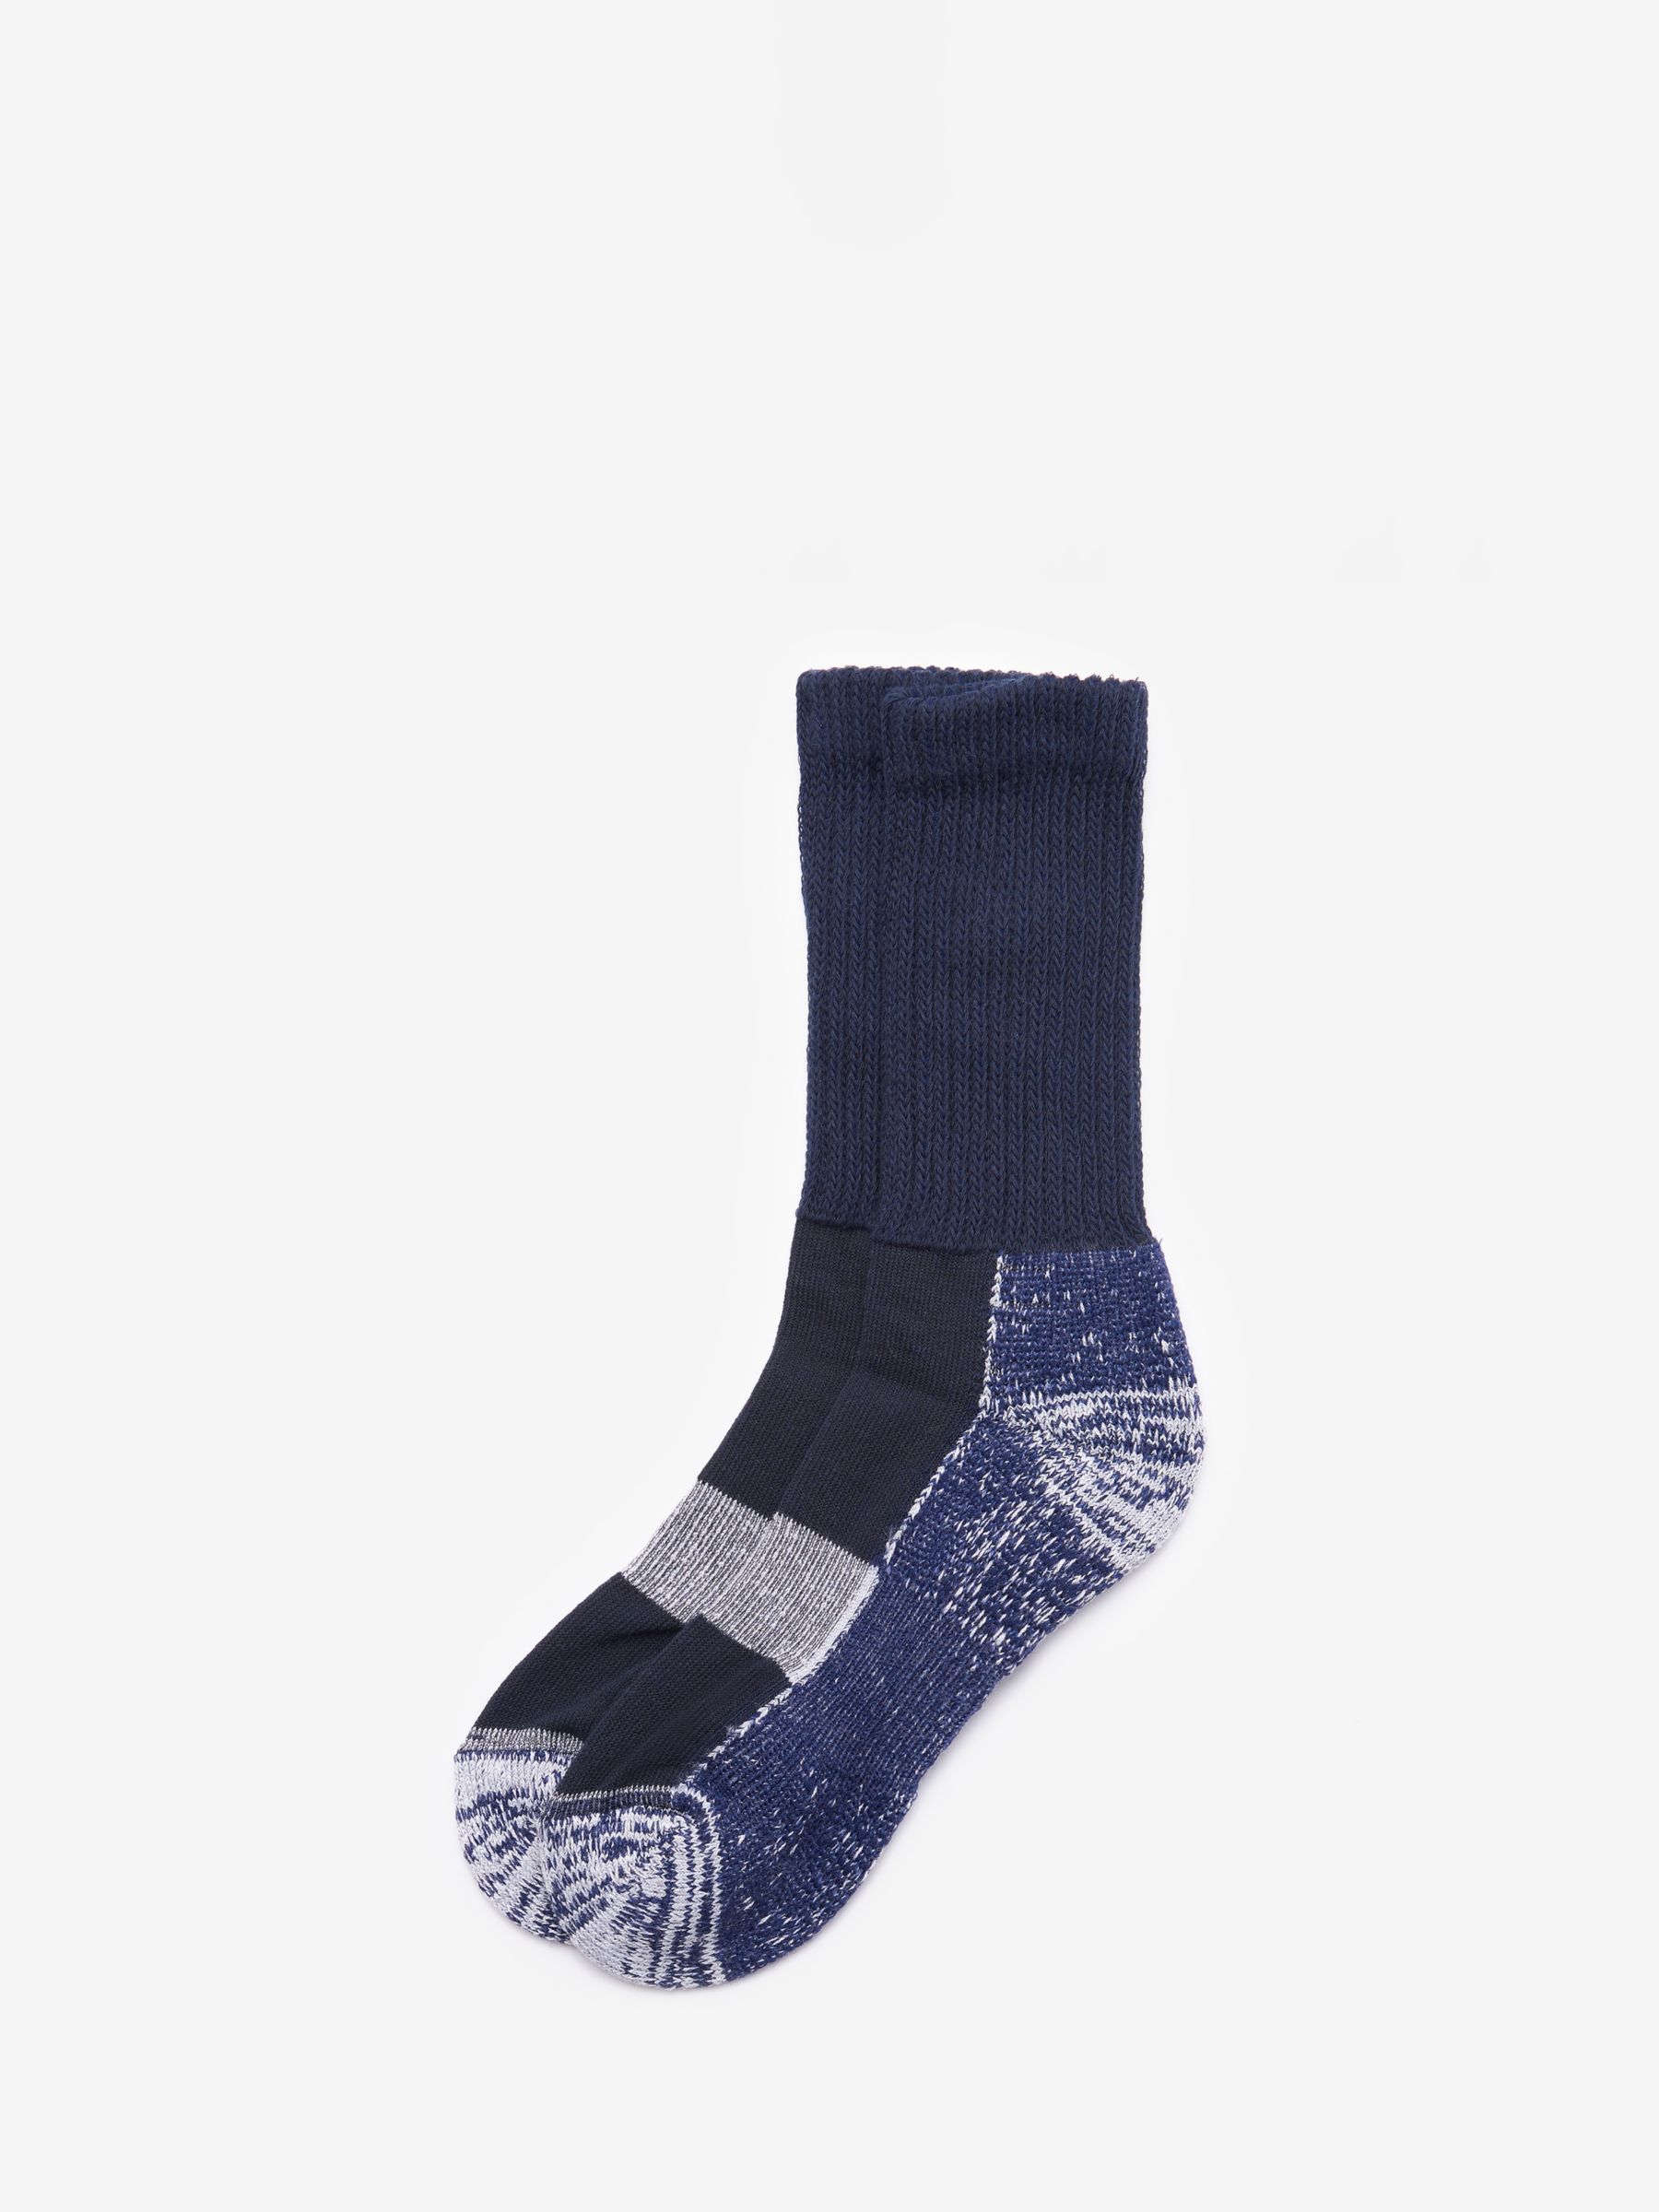 Buy Barbour Lowland Coolmax Hiker Socks, One Size, Navy Online at johnlewis.com